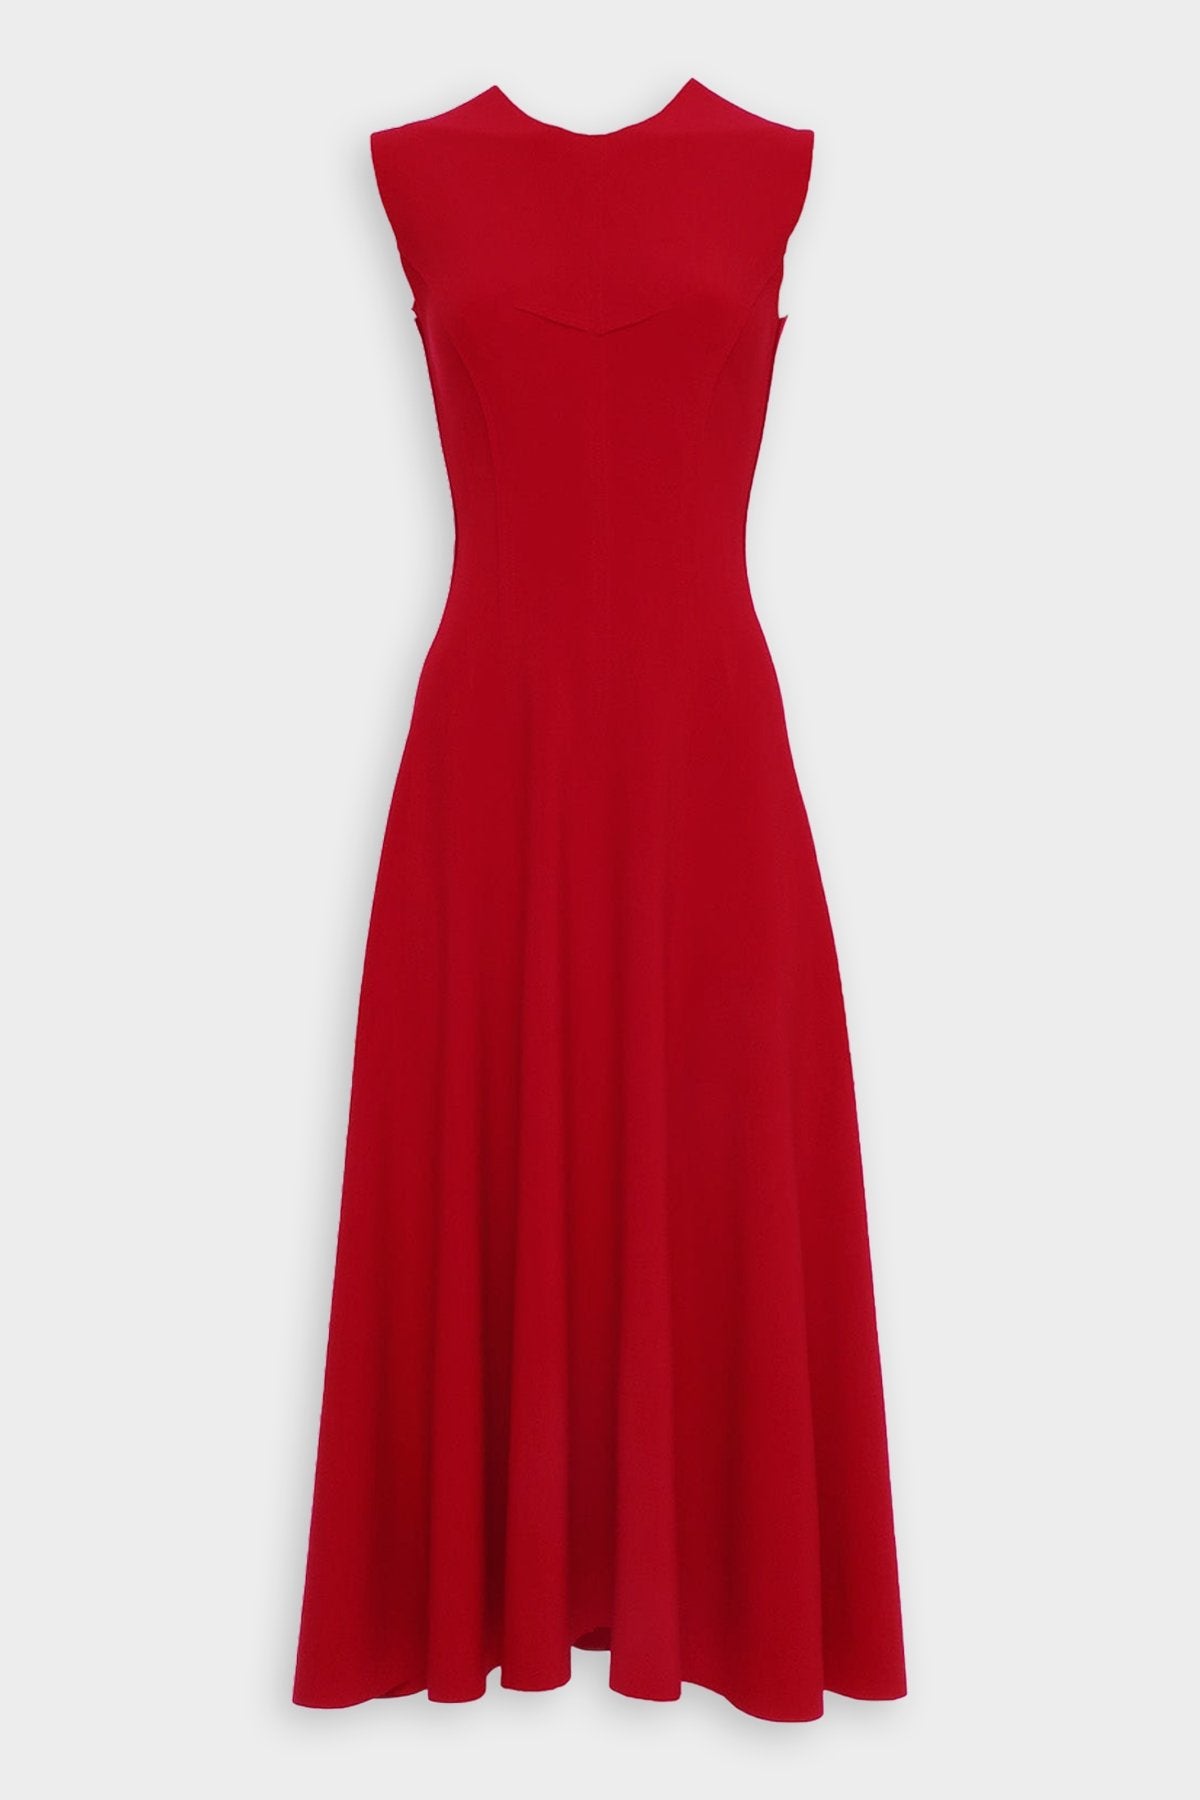 Sleeveless Grace Dress in Tiger Red - shop-olivia.com